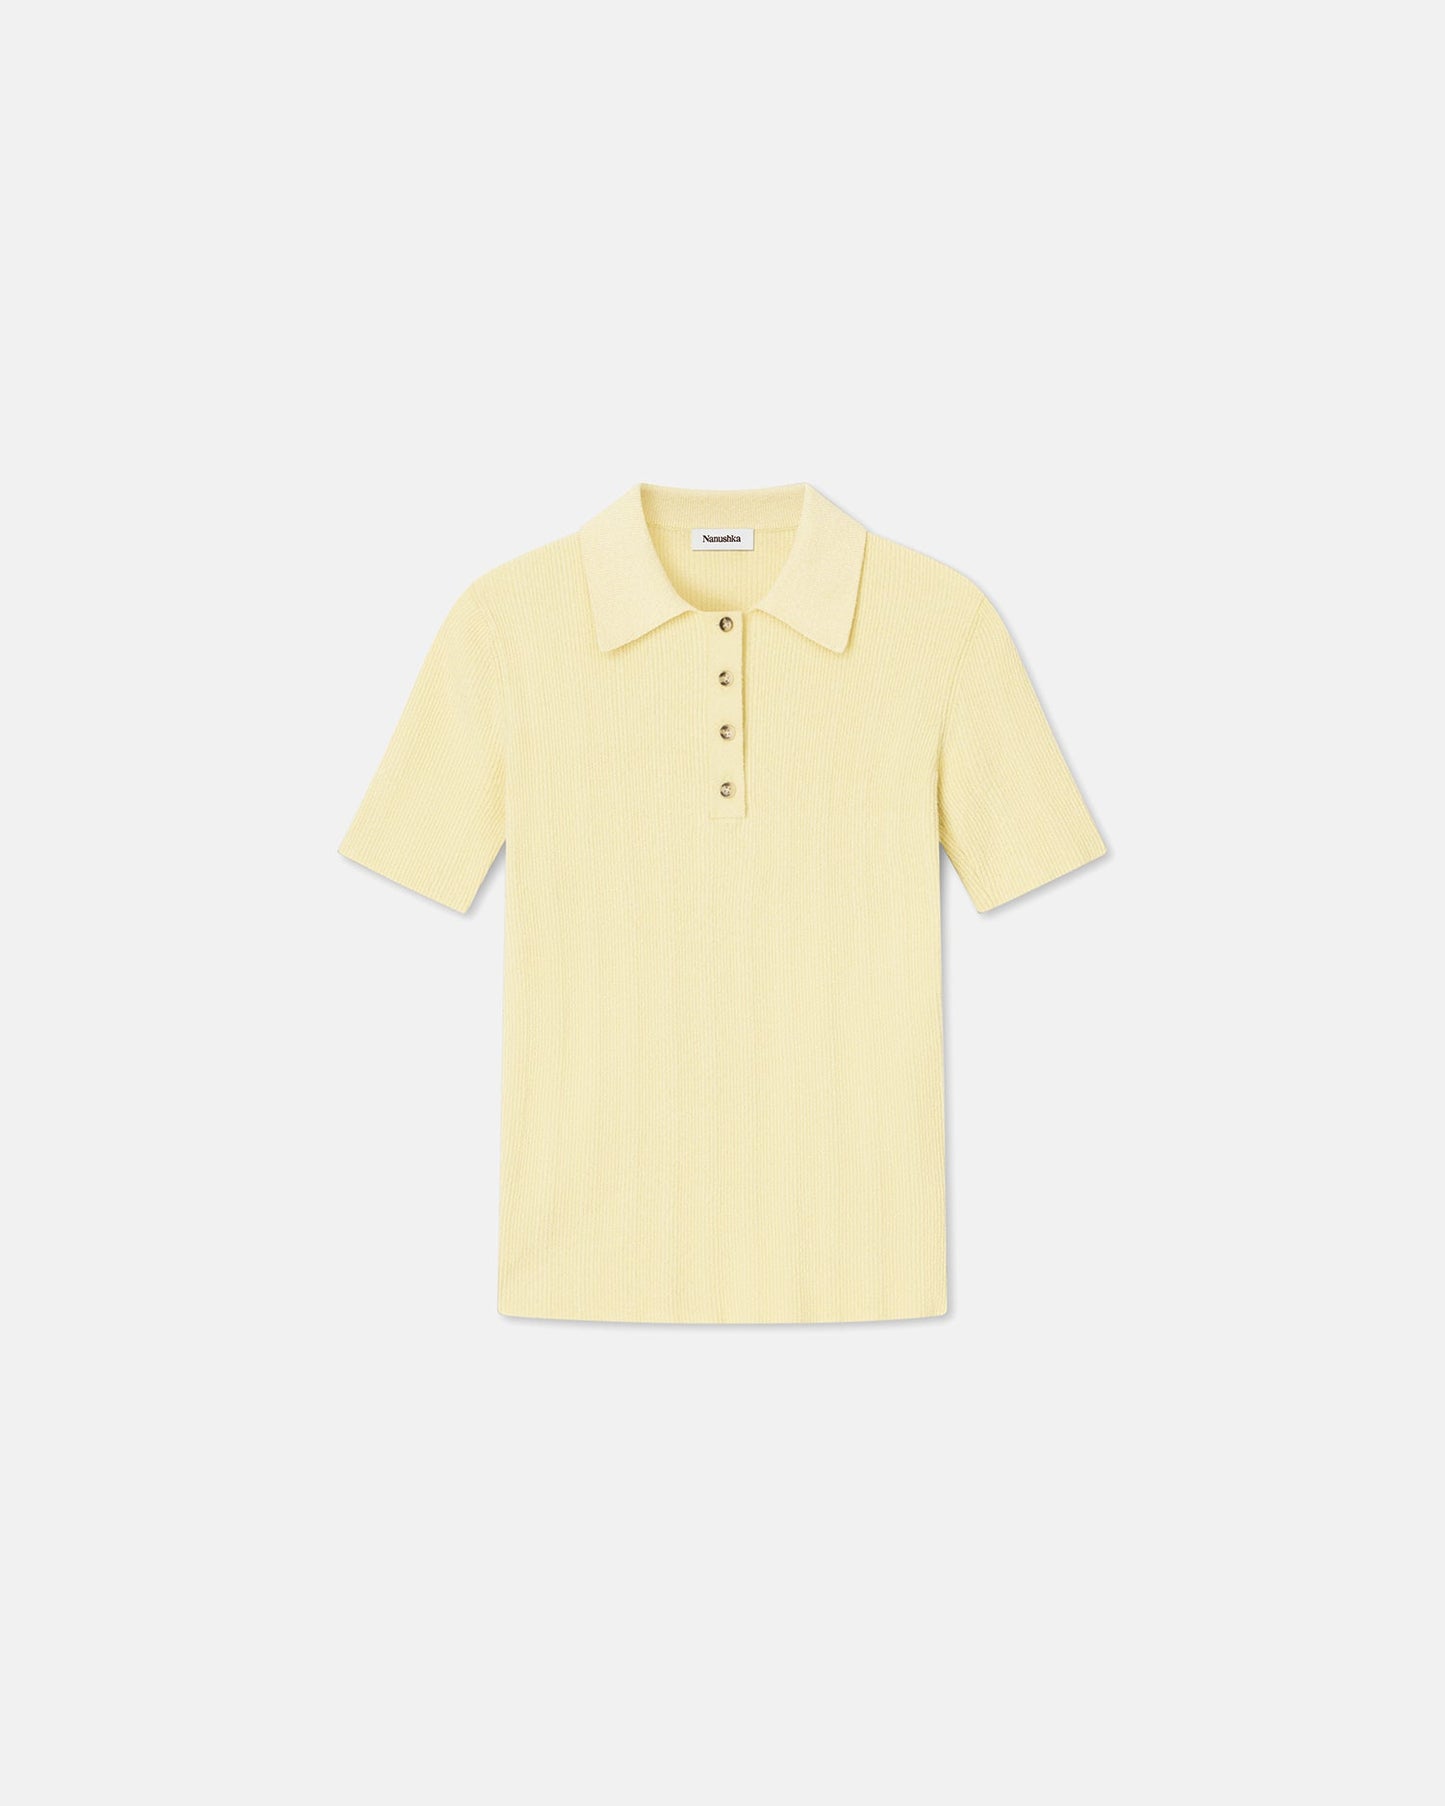 Elani - Terry-Knit Polo - Pale Yellow